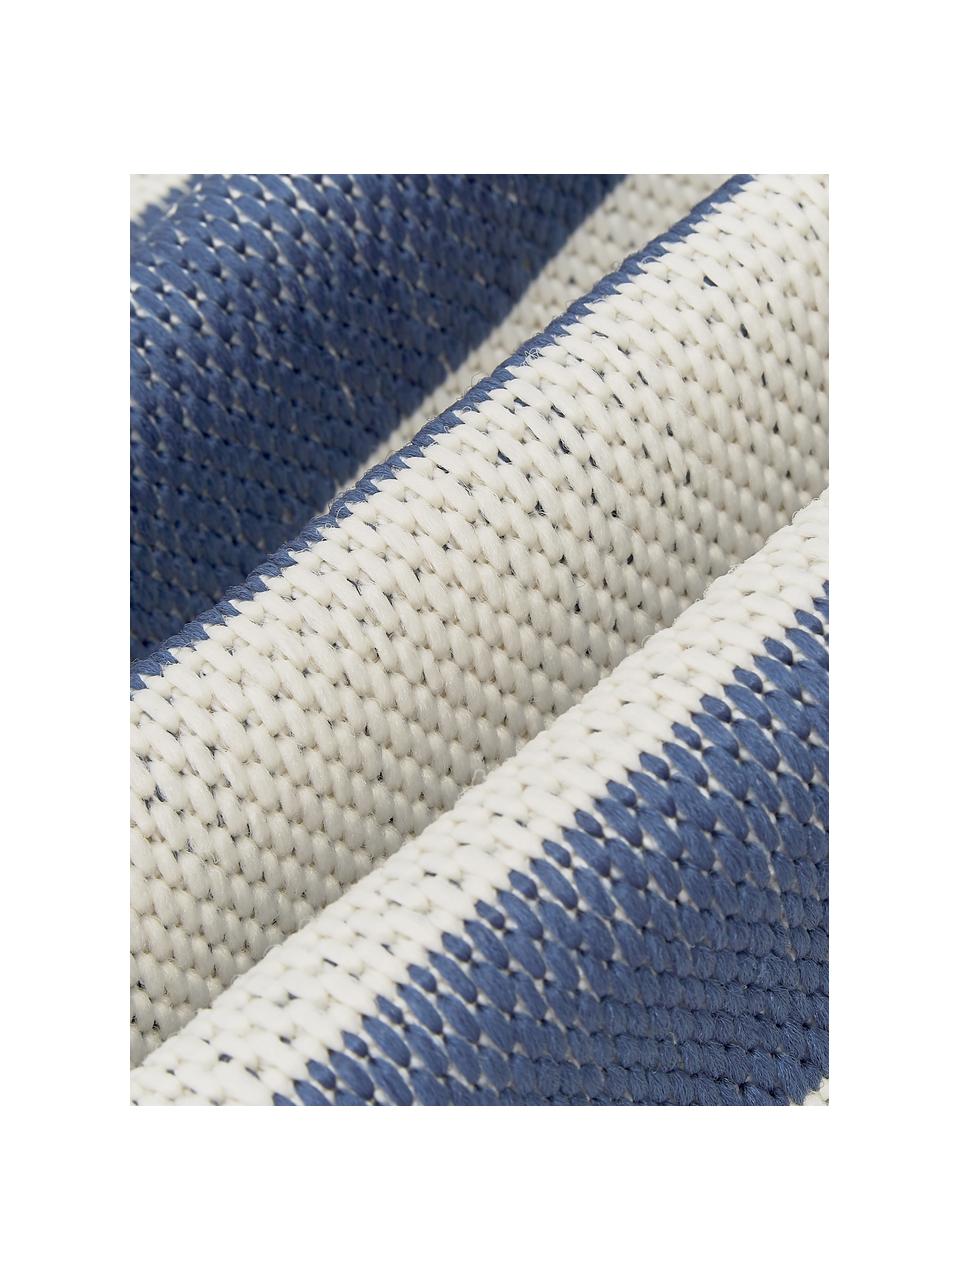 Gestreifter In- & Outdoor-Teppich Axa in Blau/Cremeweiss, 86% Polypropylen, 14% Polyester, Cremeweiss, Blau, B 200 x L 290 cm (Grösse L)